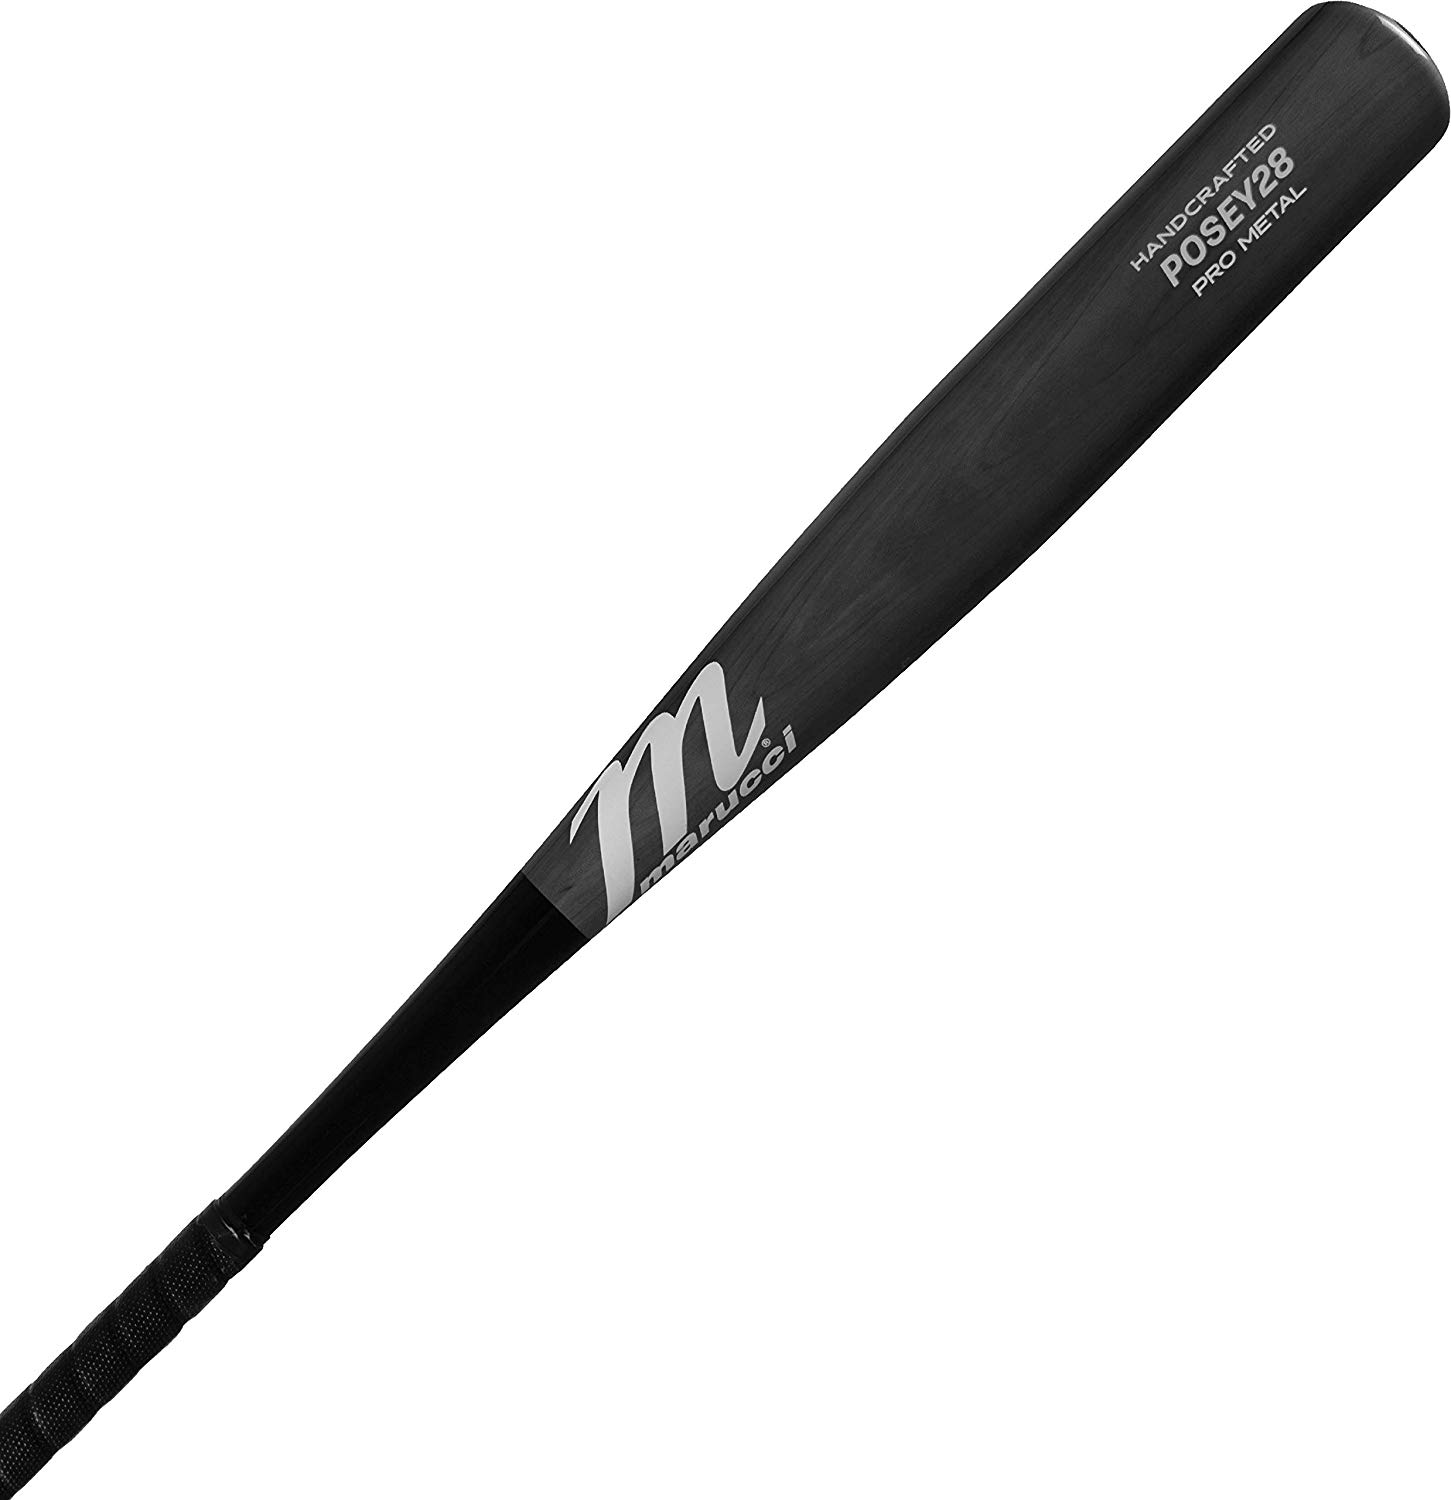 marucci-posey28-pro-metal-bbcor-baseball-bat-mcbp28s-32-inch-29-oz MCBP28S-3229 Marucci 849817095584 <p>AZ105 alloy the strongest aluminum on the Marucci bat line allows